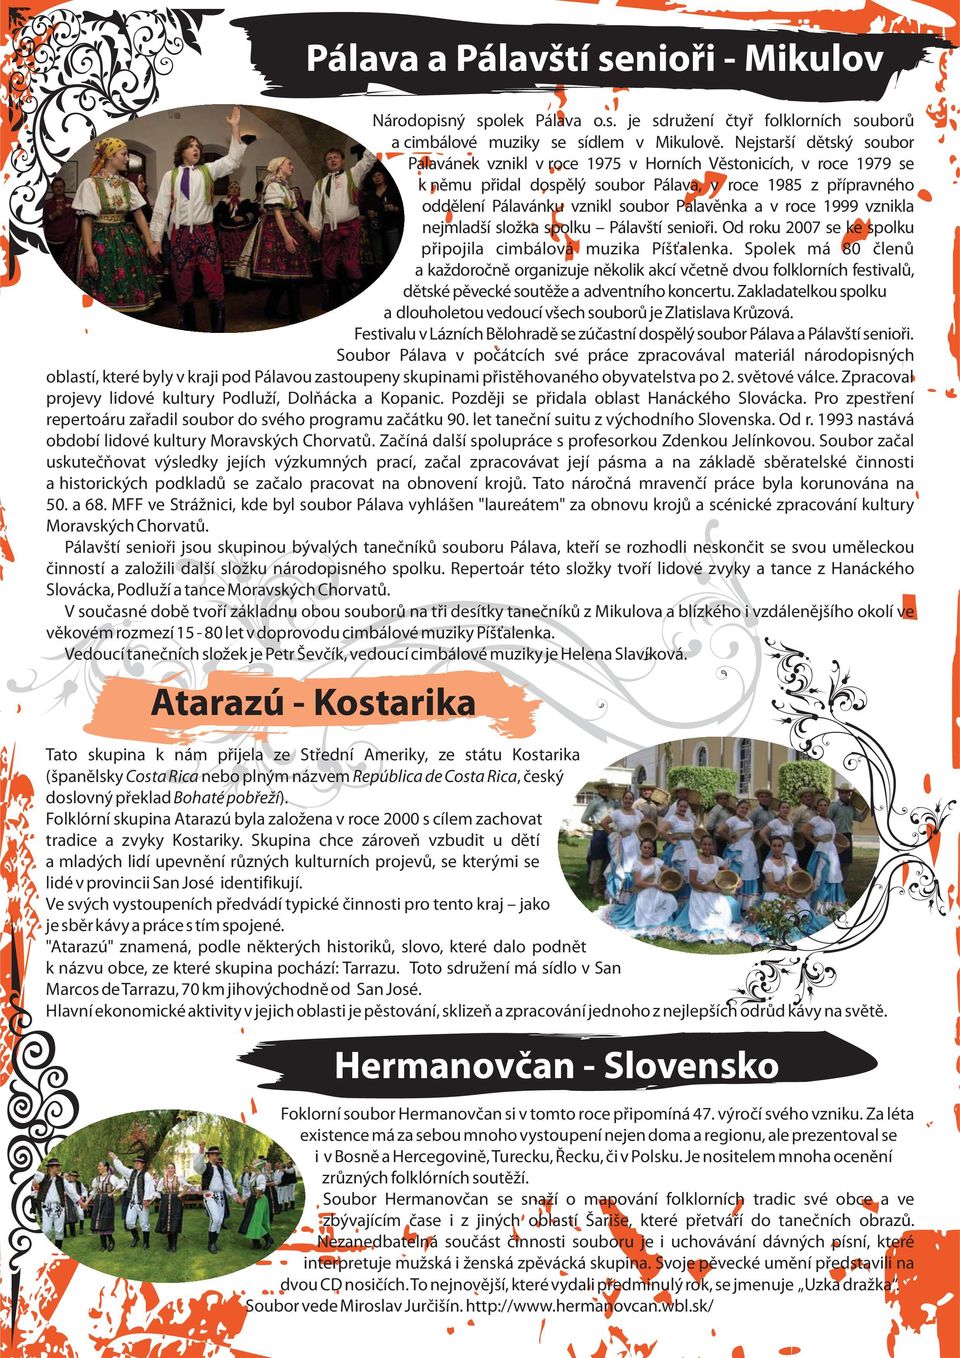 v roce 1999 vznikla nejmladší složka spolku Pálavští senioři. Od roku 2007 se ke spolku připojila cimbálová muzika Píšťalenka.